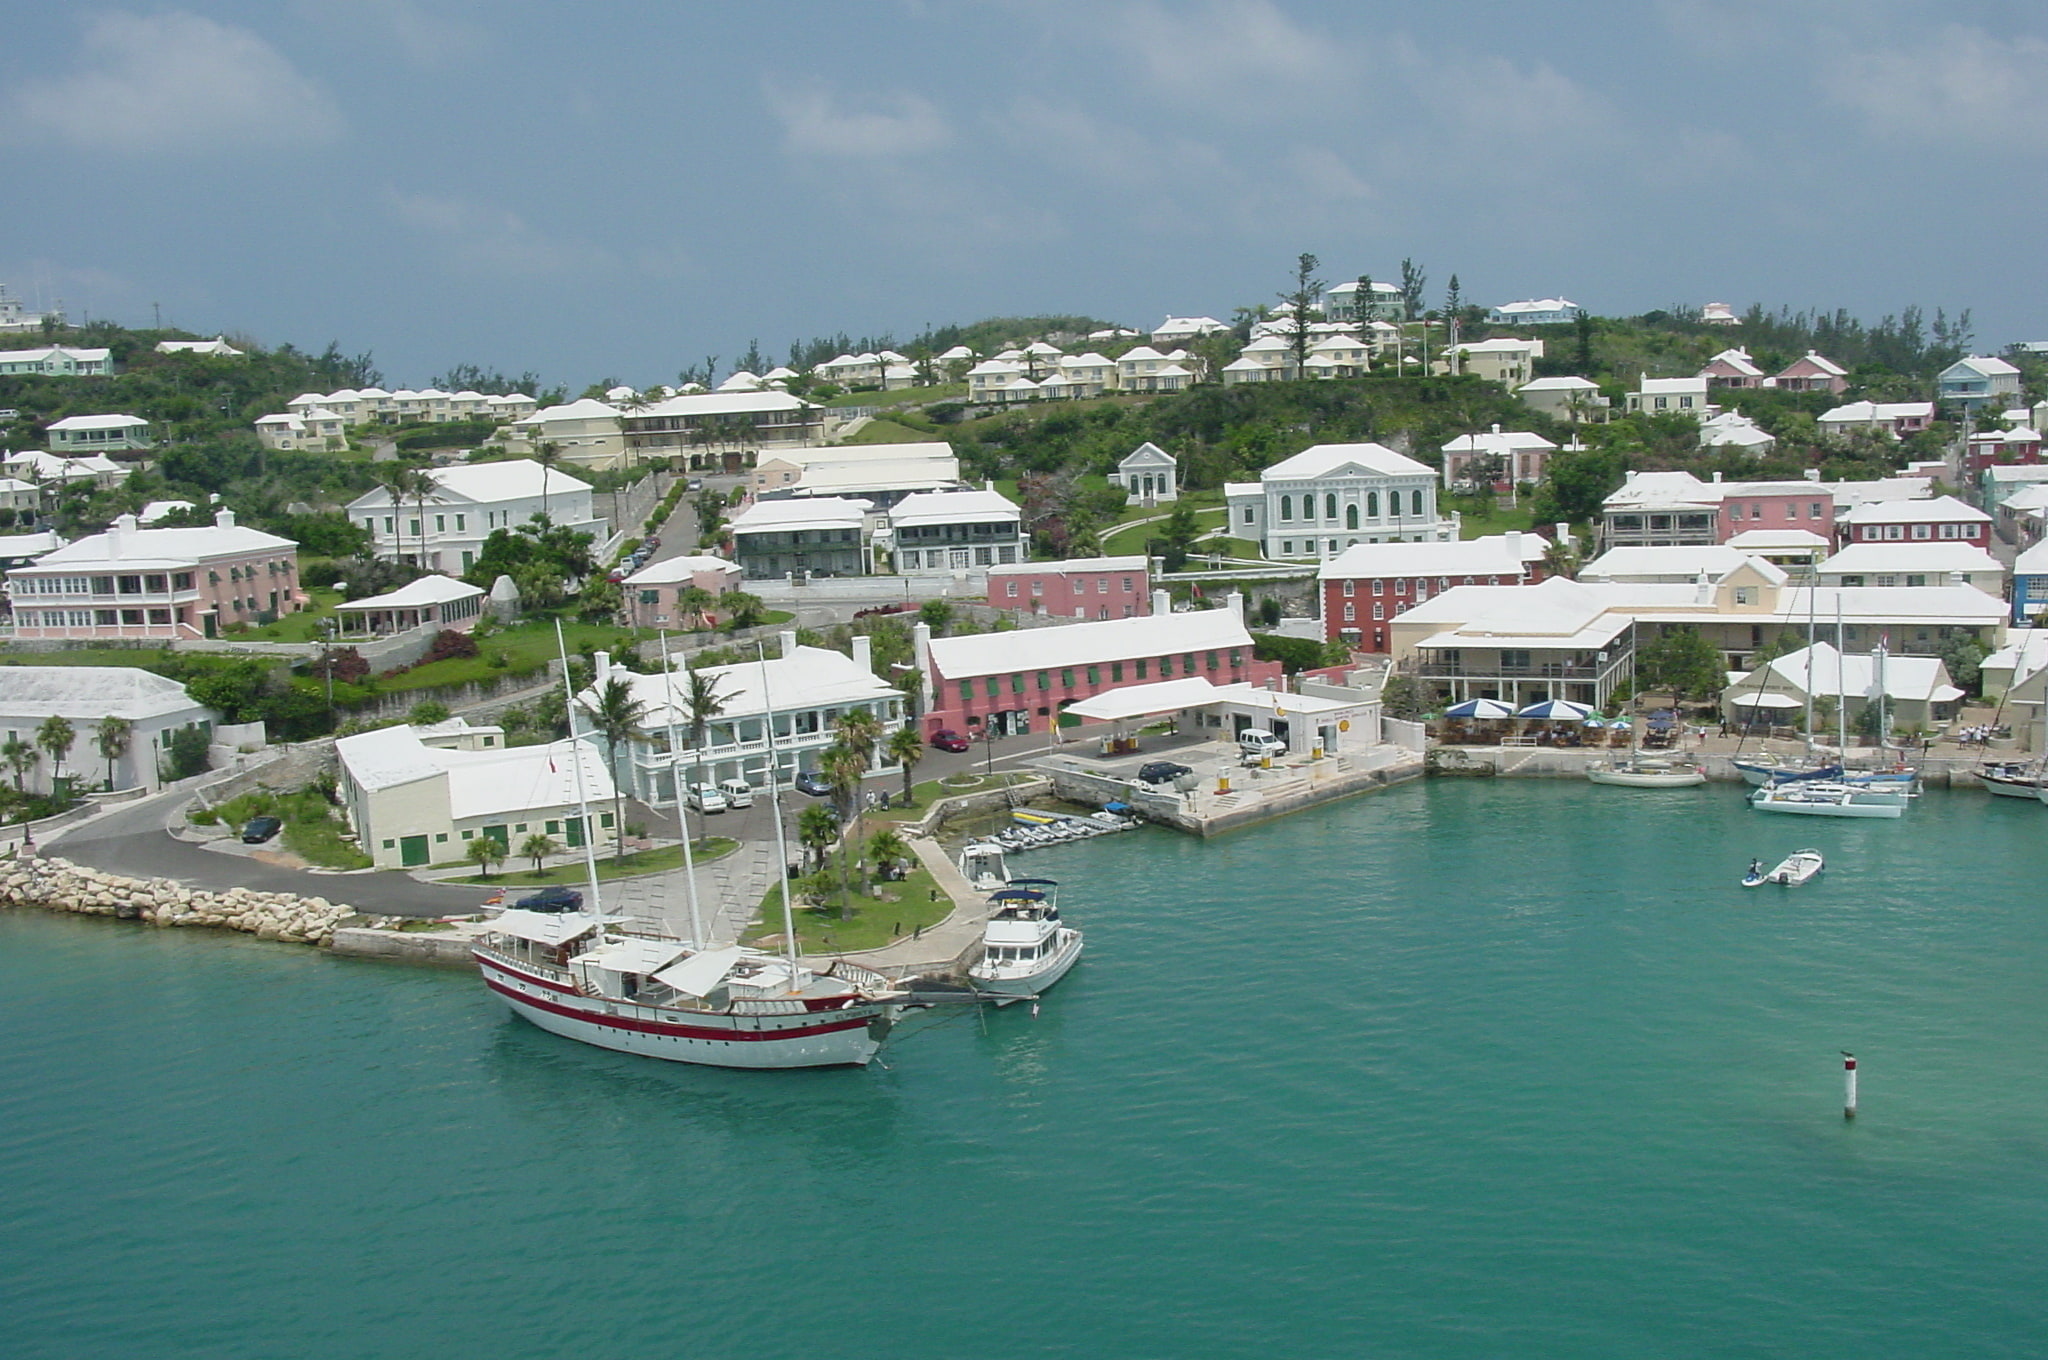 Saint George’s, Bermuda